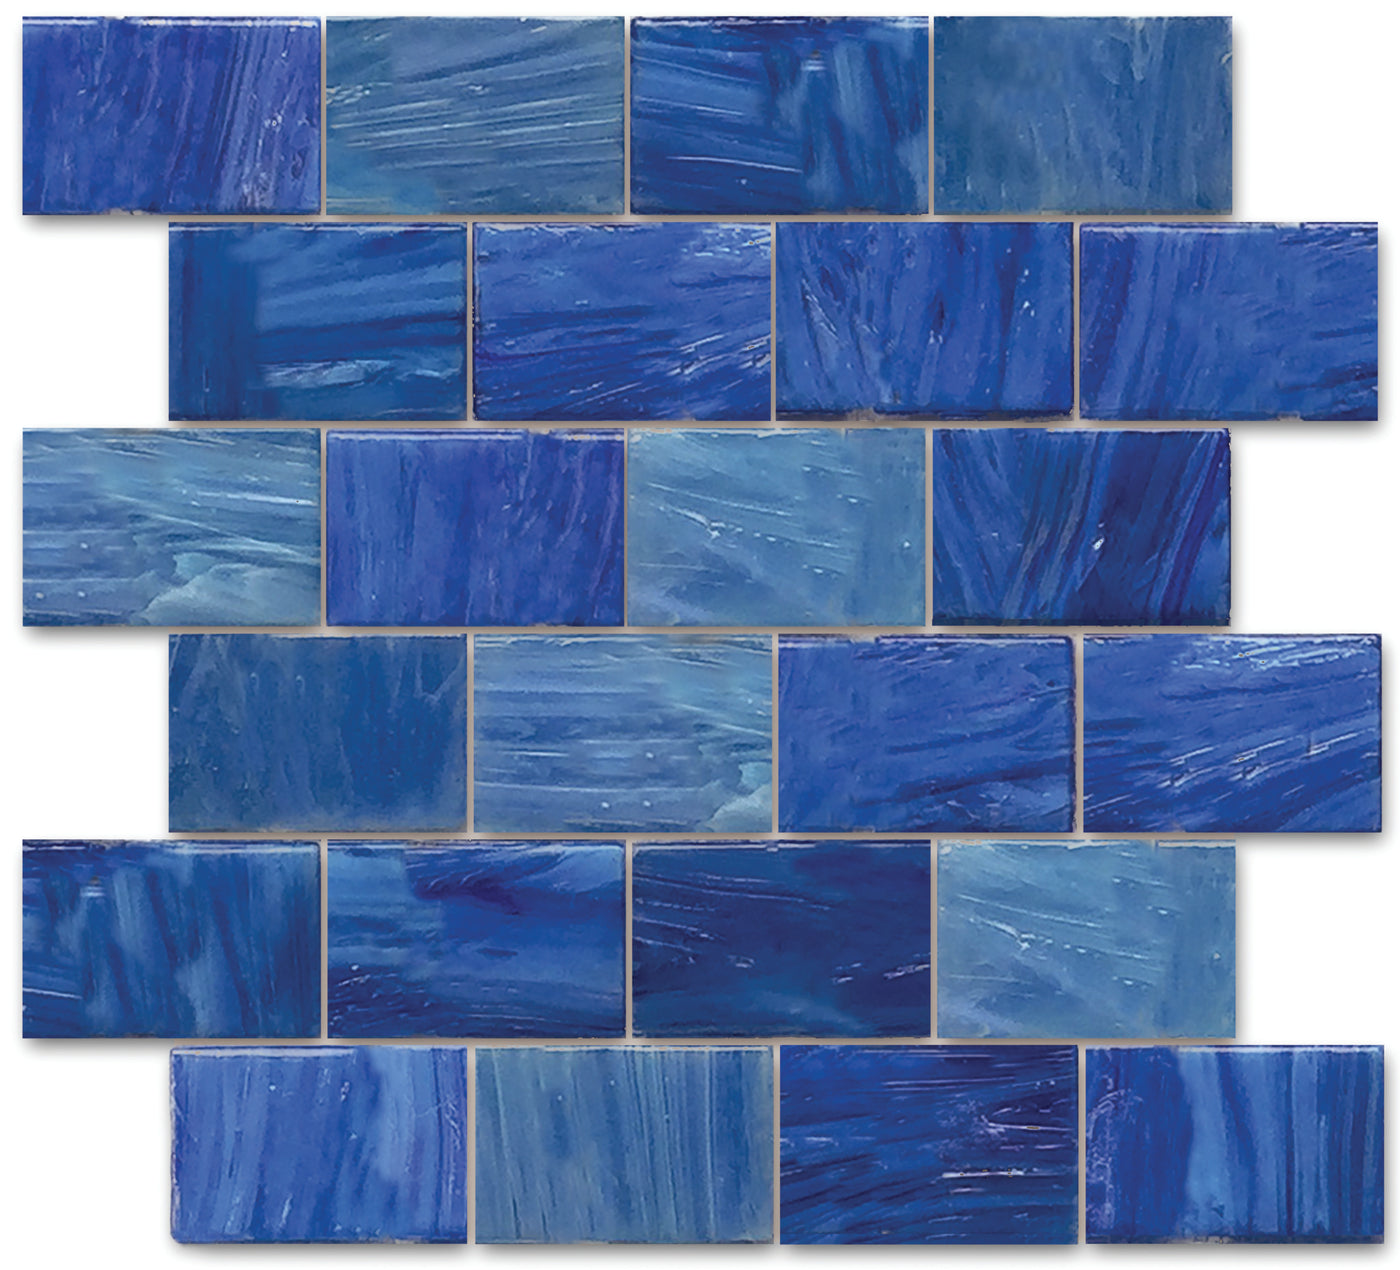 QDI Surfaces Garden Wall 2 x 3 12" x 12" Glass Mosaic